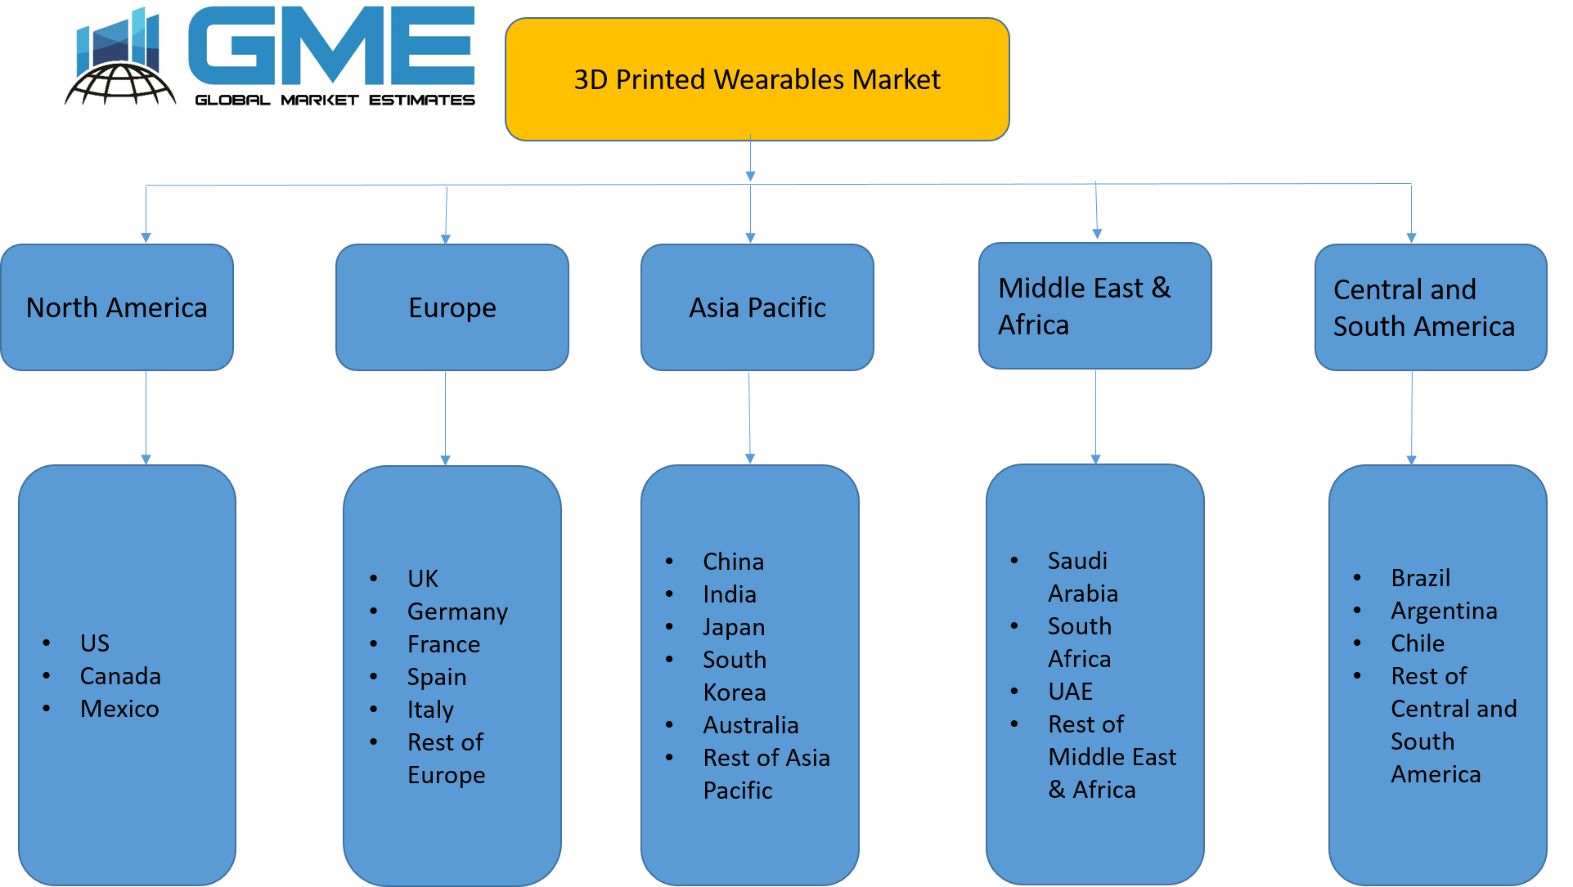 3D Printed Wearables Market - Regional Analysis